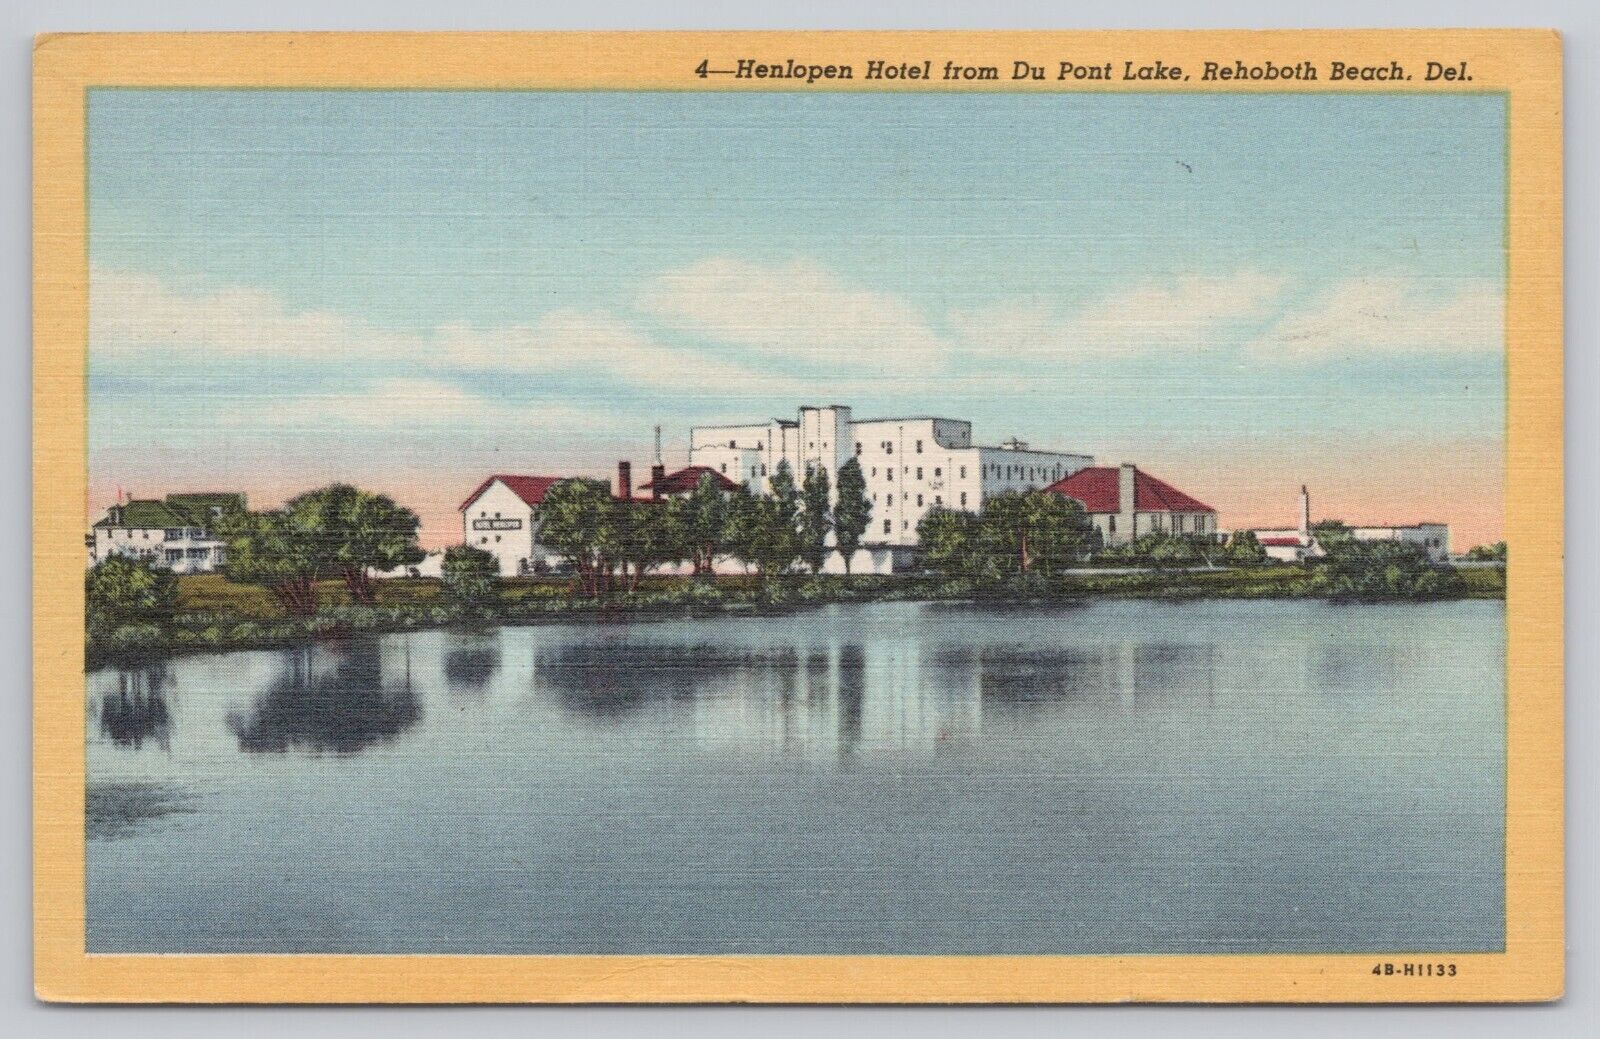 Rehoboth Beach Delaware, Henlopen Hotel from Du Pont Lake, Vintage Postcard